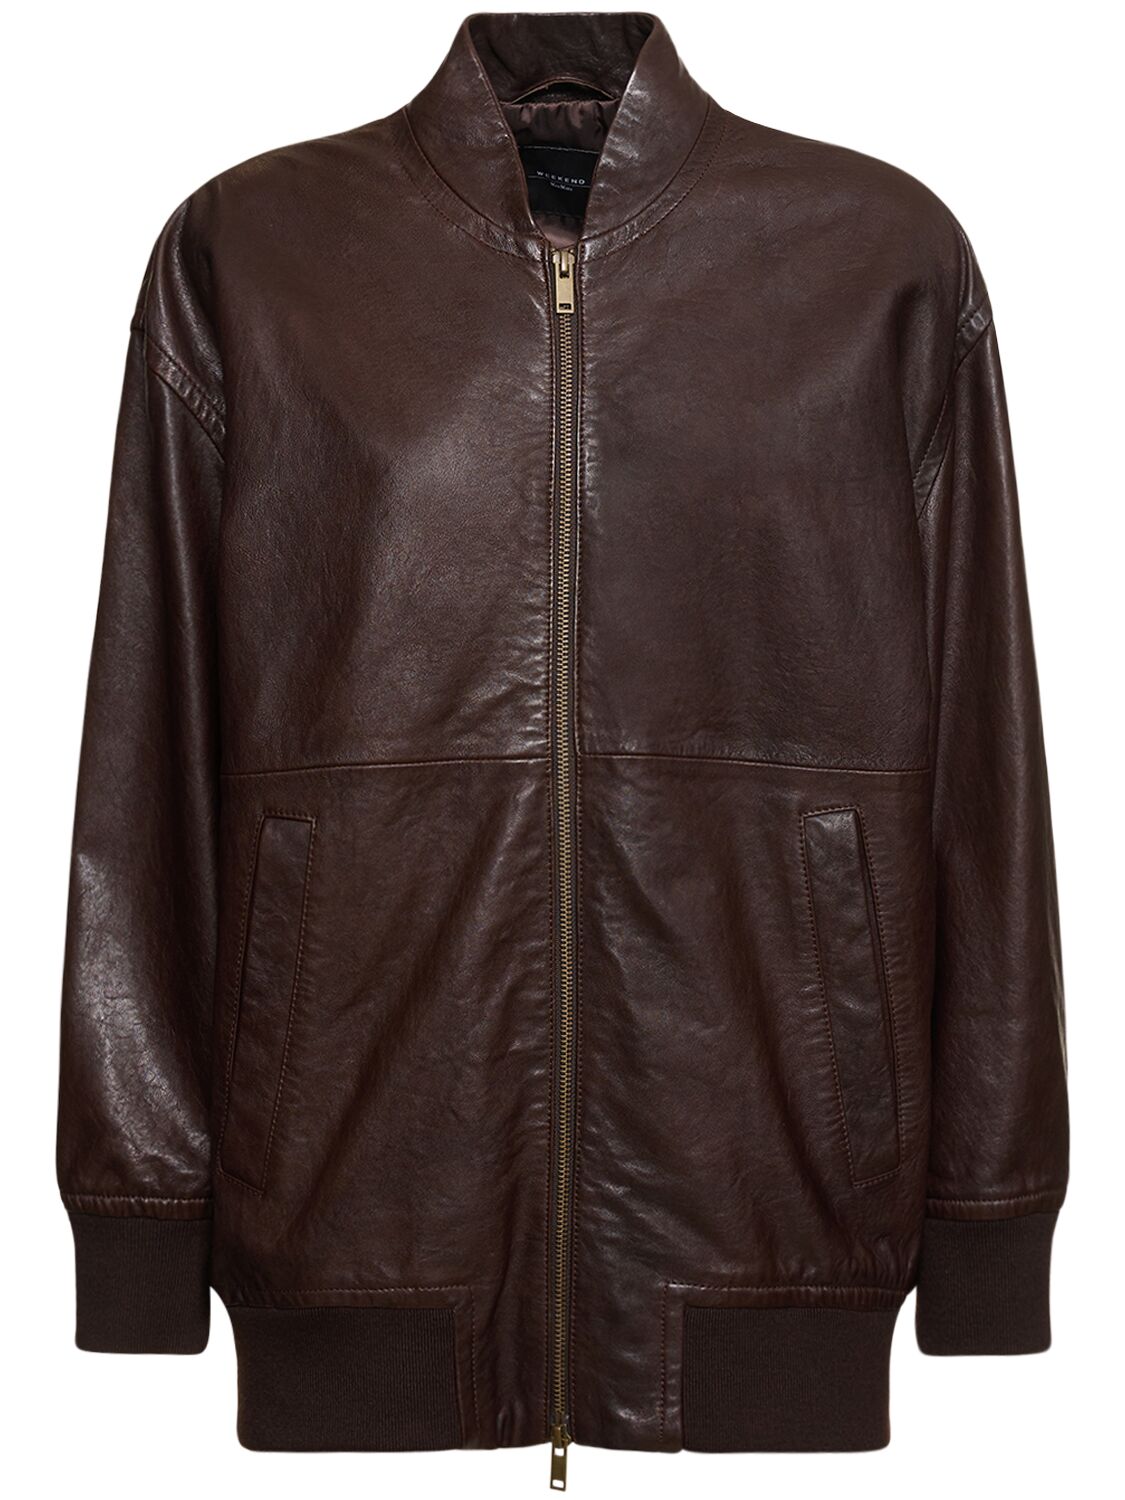 Cursore Zip-up Leather Jacket